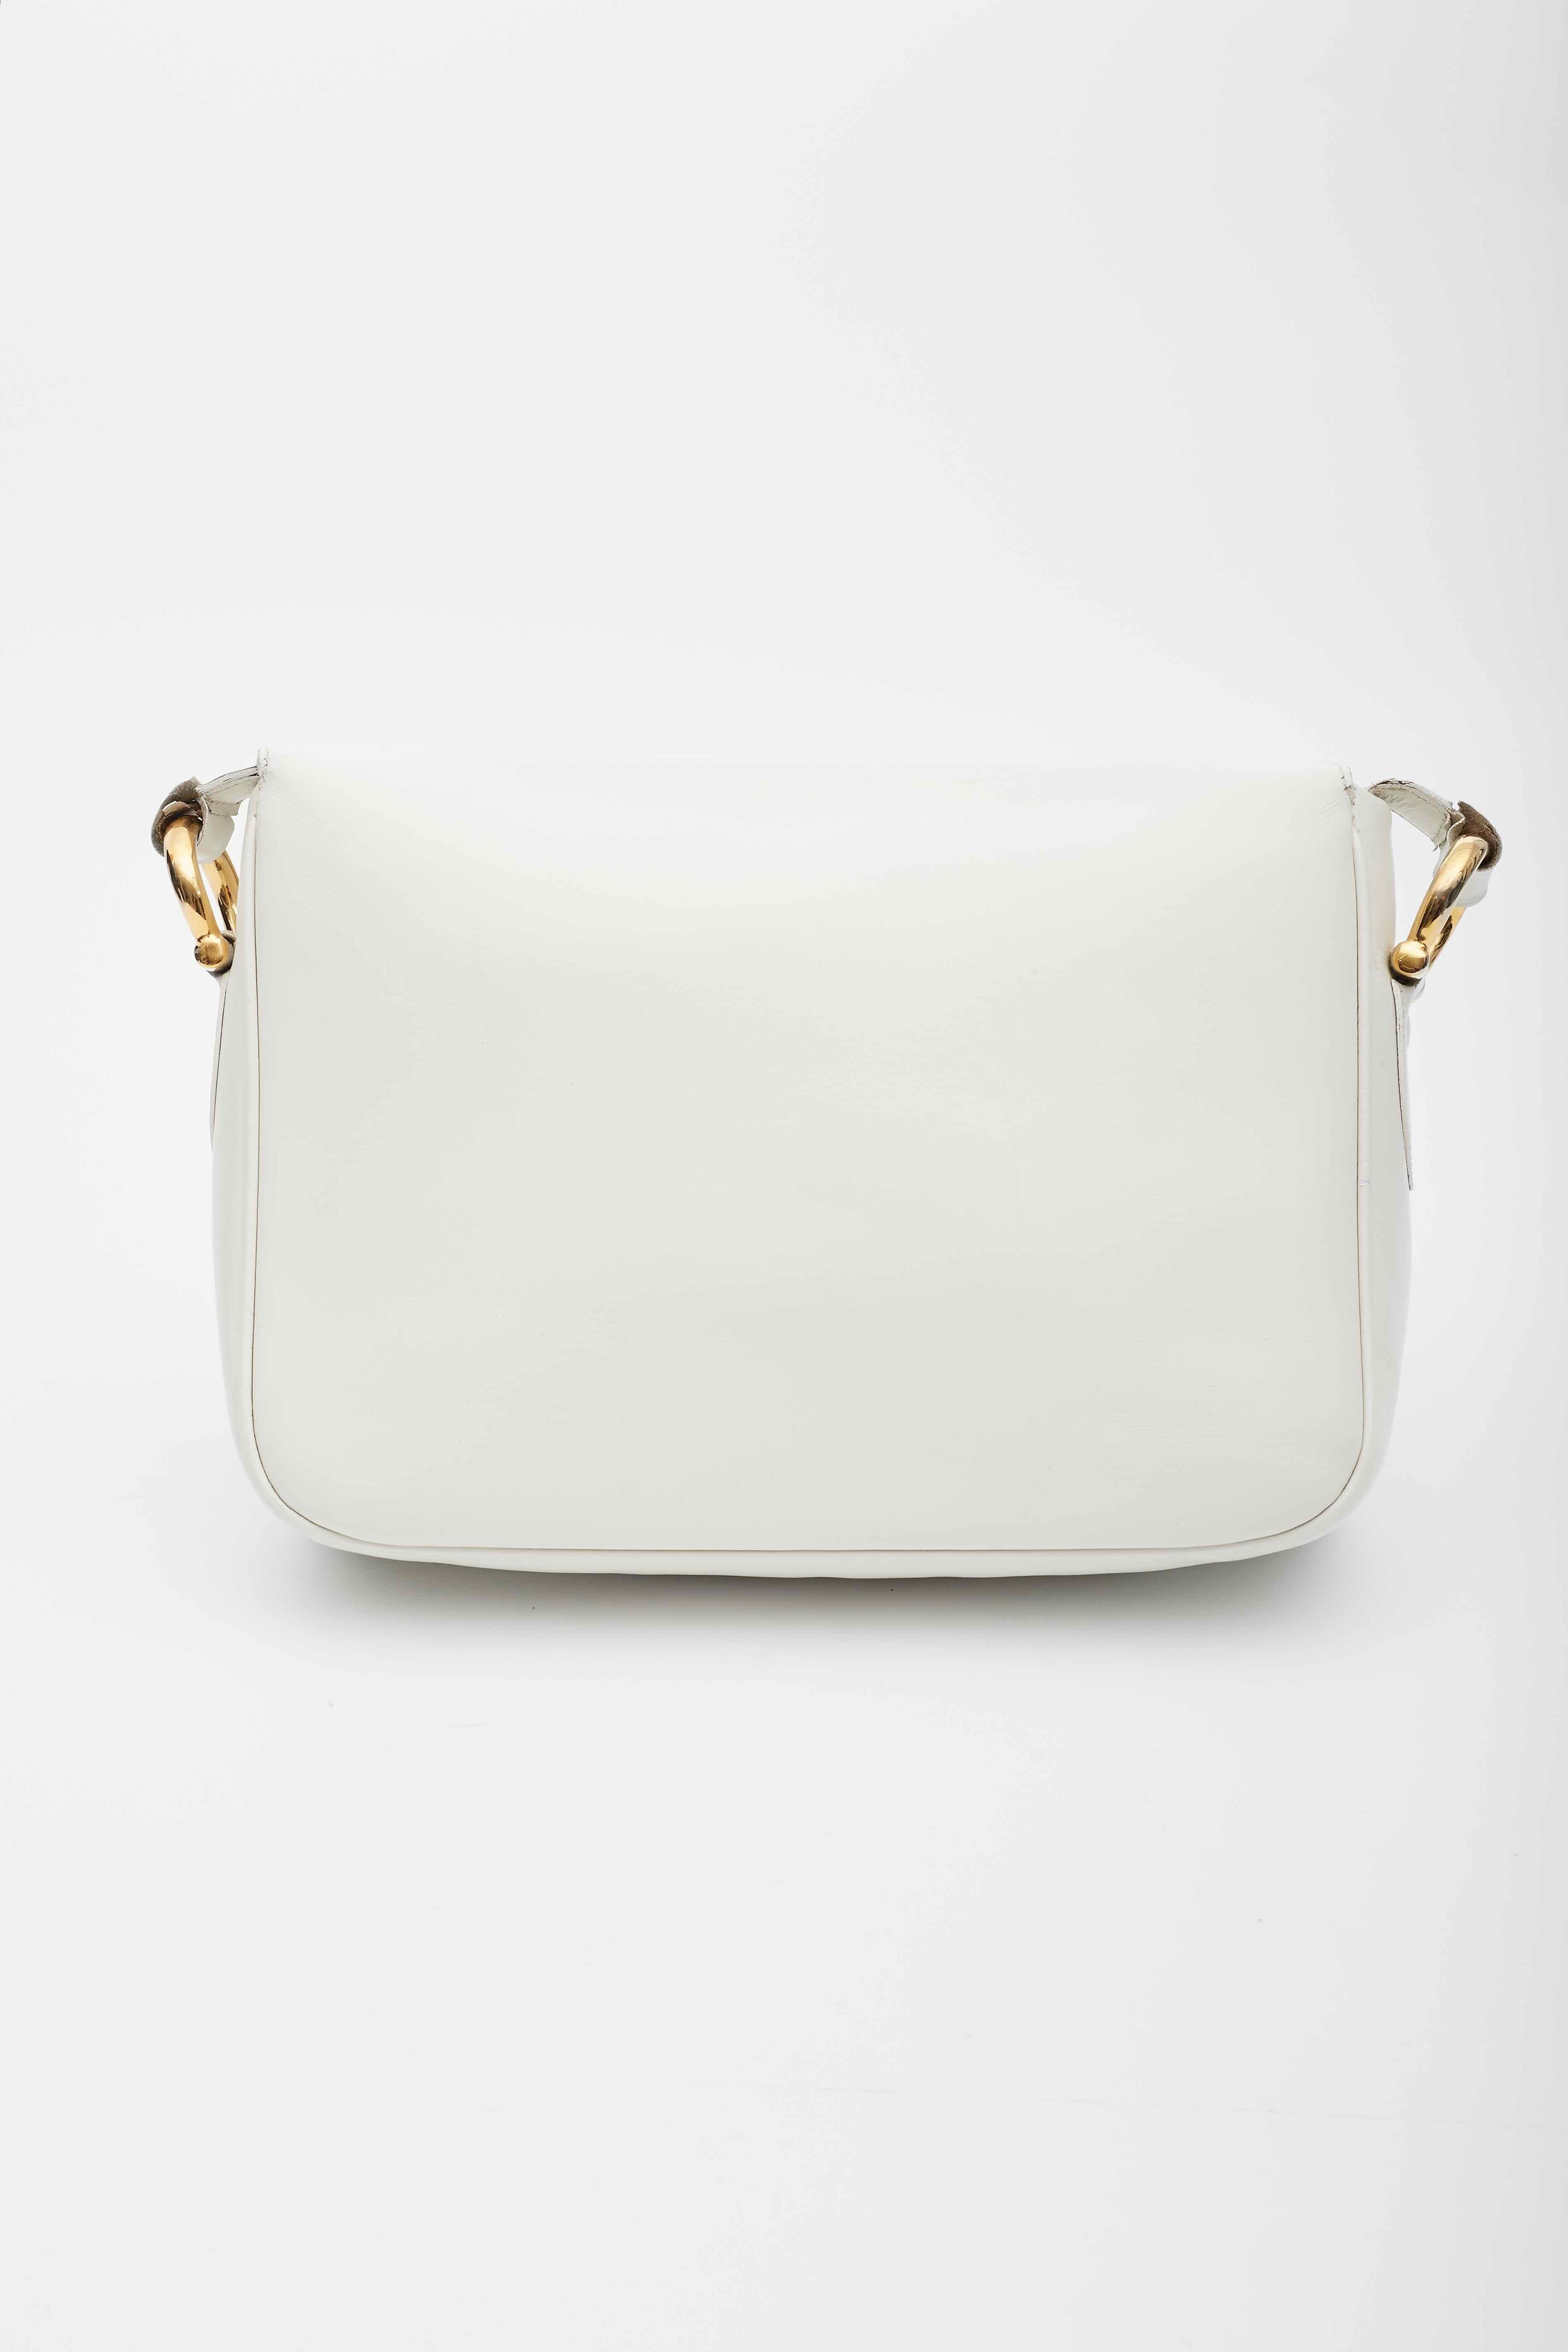 Celine Vintage White Leather Shoulder Bag In Fair Condition For Sale In Montreal, Quebec